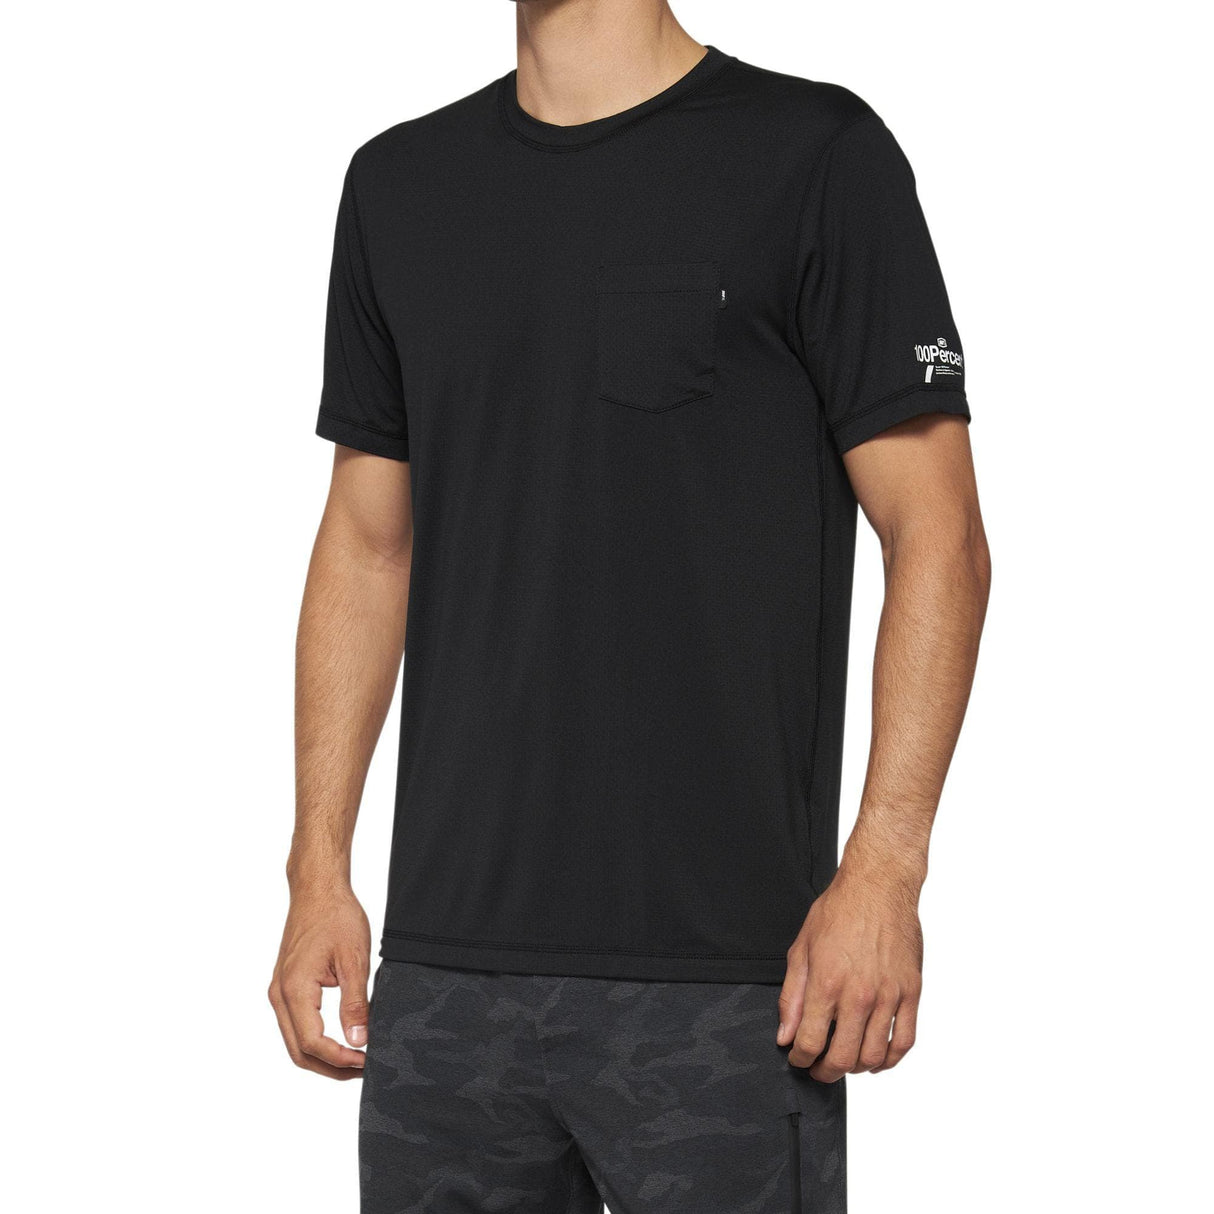 100% MISSION Athletic Short Sleeve T-shirt Black S